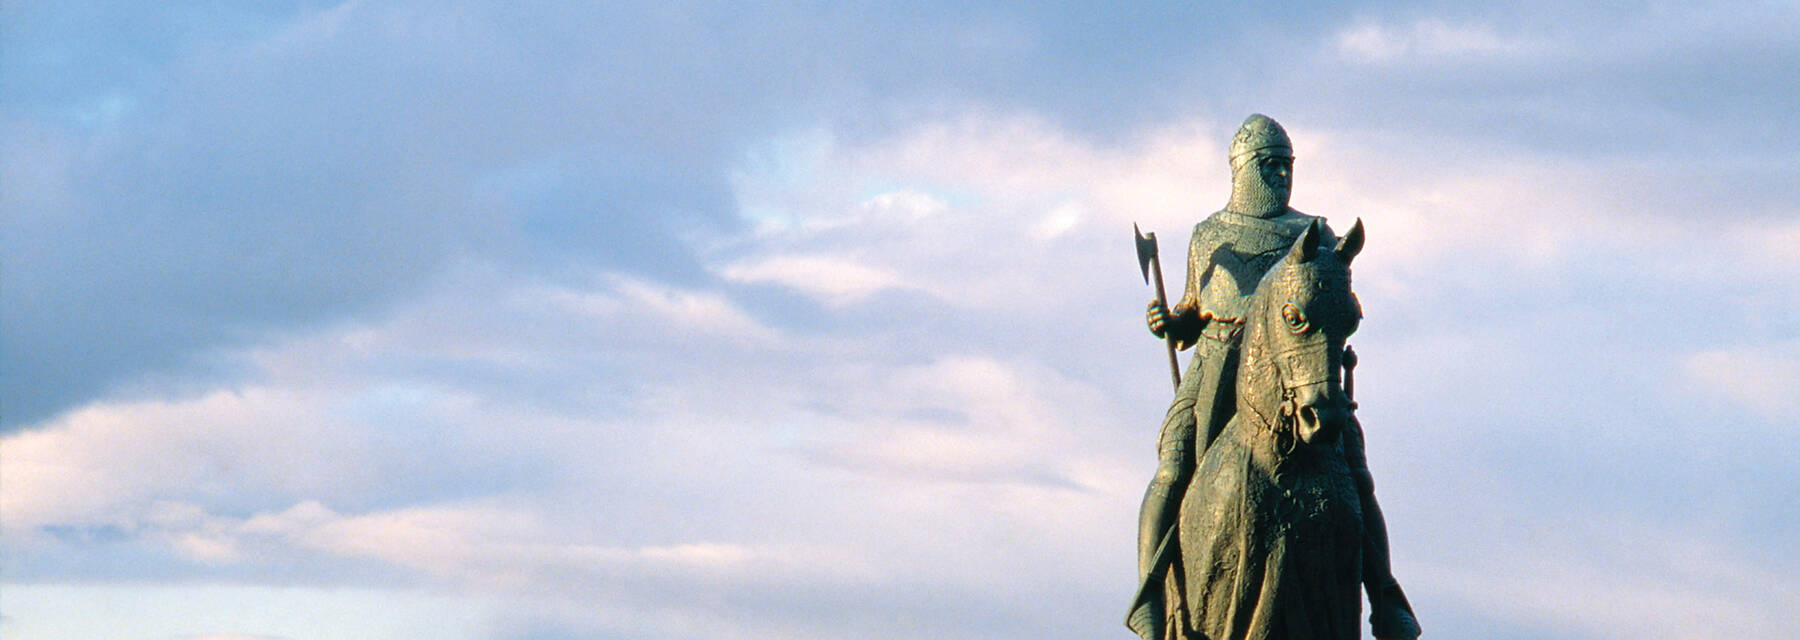 Robert the Bruce statue at Bannockburn